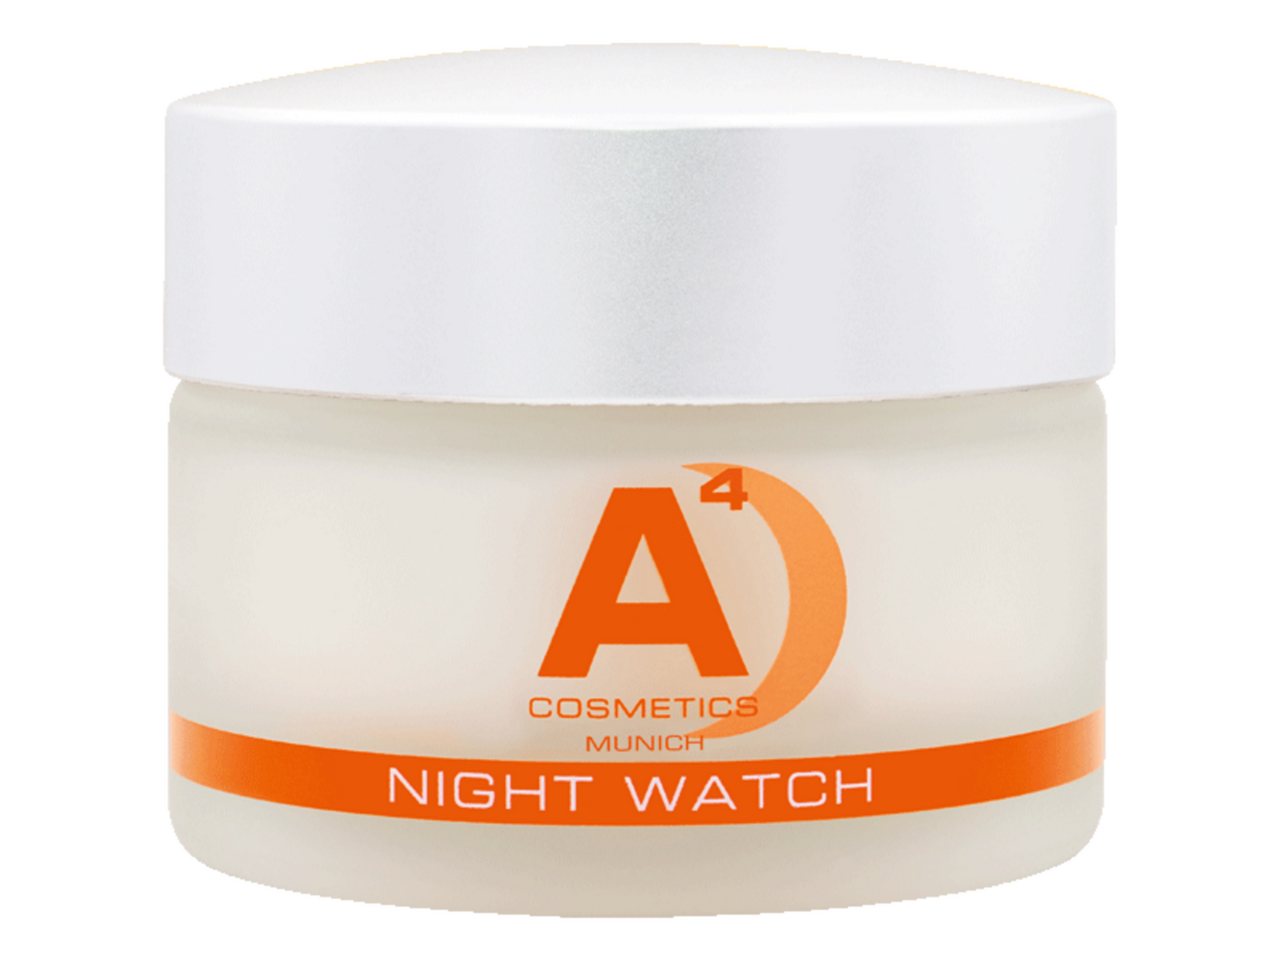 A4 Cosmetics Tagescreme Night Watch von A4 Cosmetics